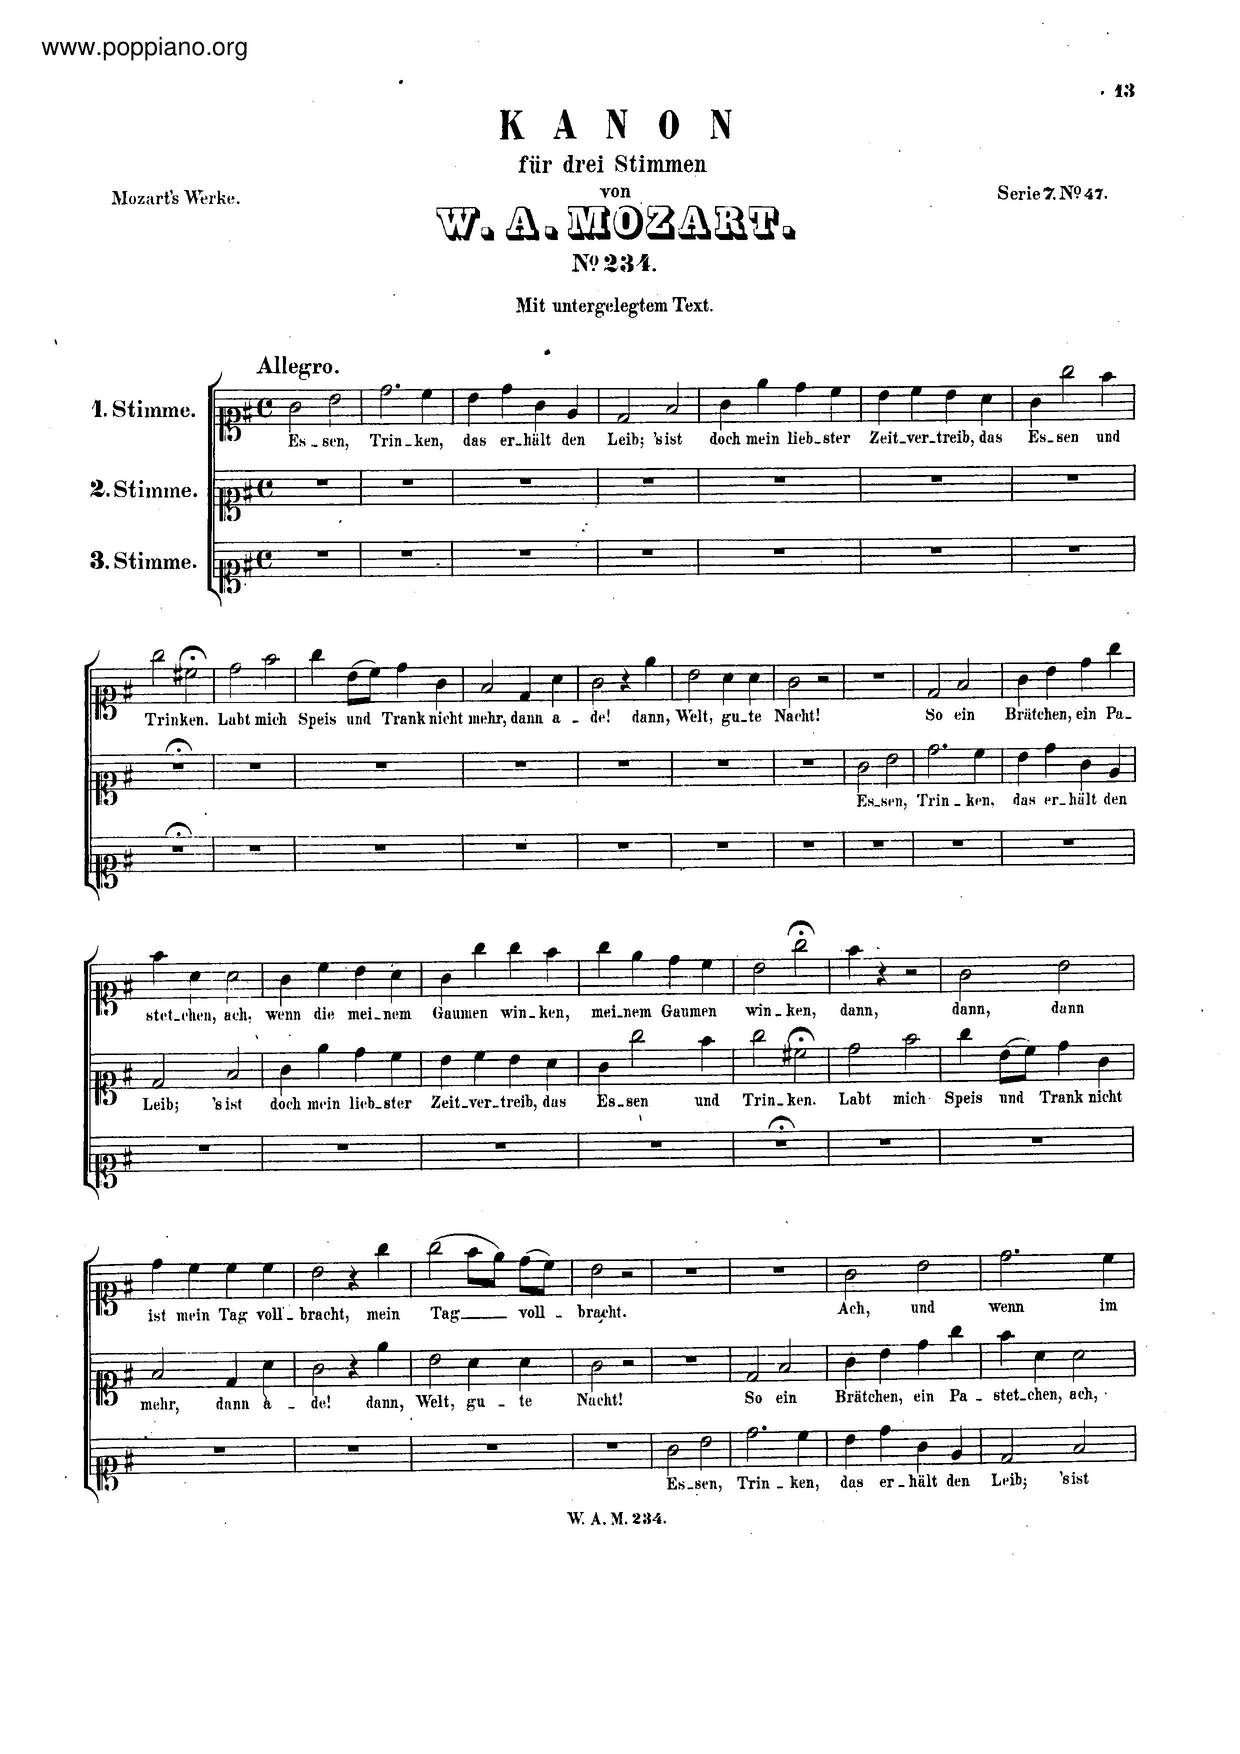 Canon For 3 Voices In G Major, K. 234/382E Score